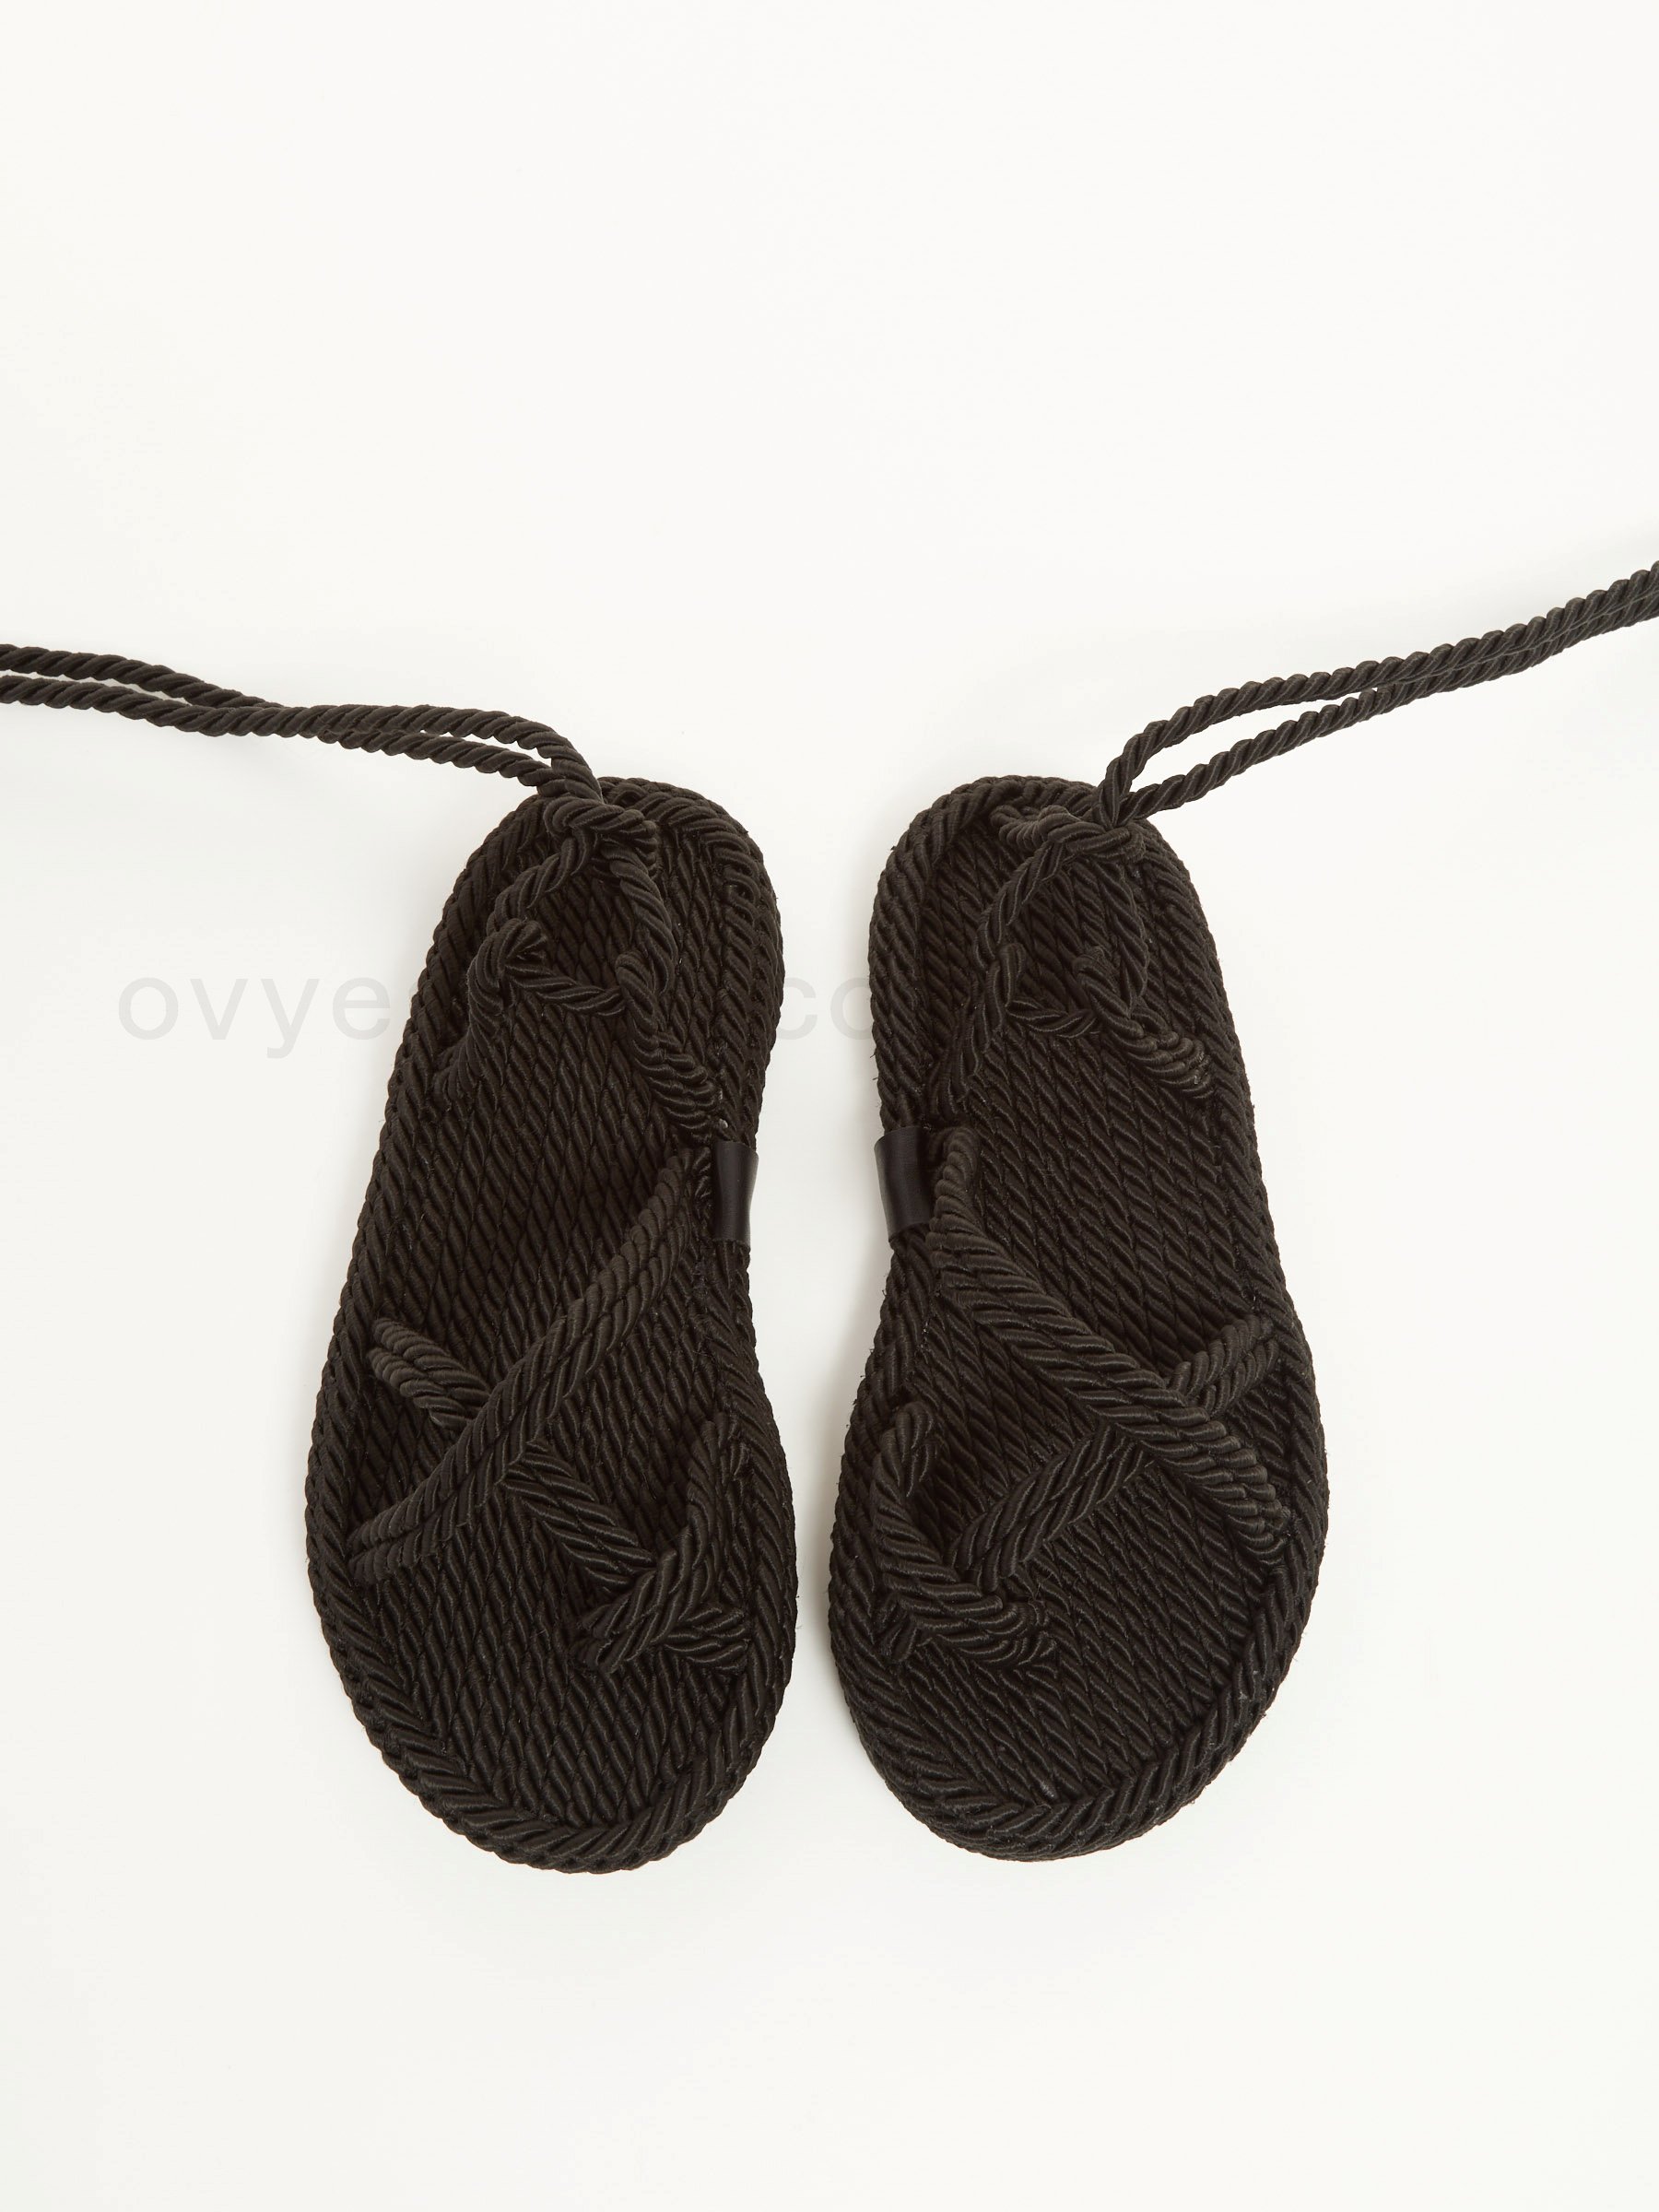 ovy&#232; outlet Rope Flat Sandals F0817885-0711 Outlet Online Shop